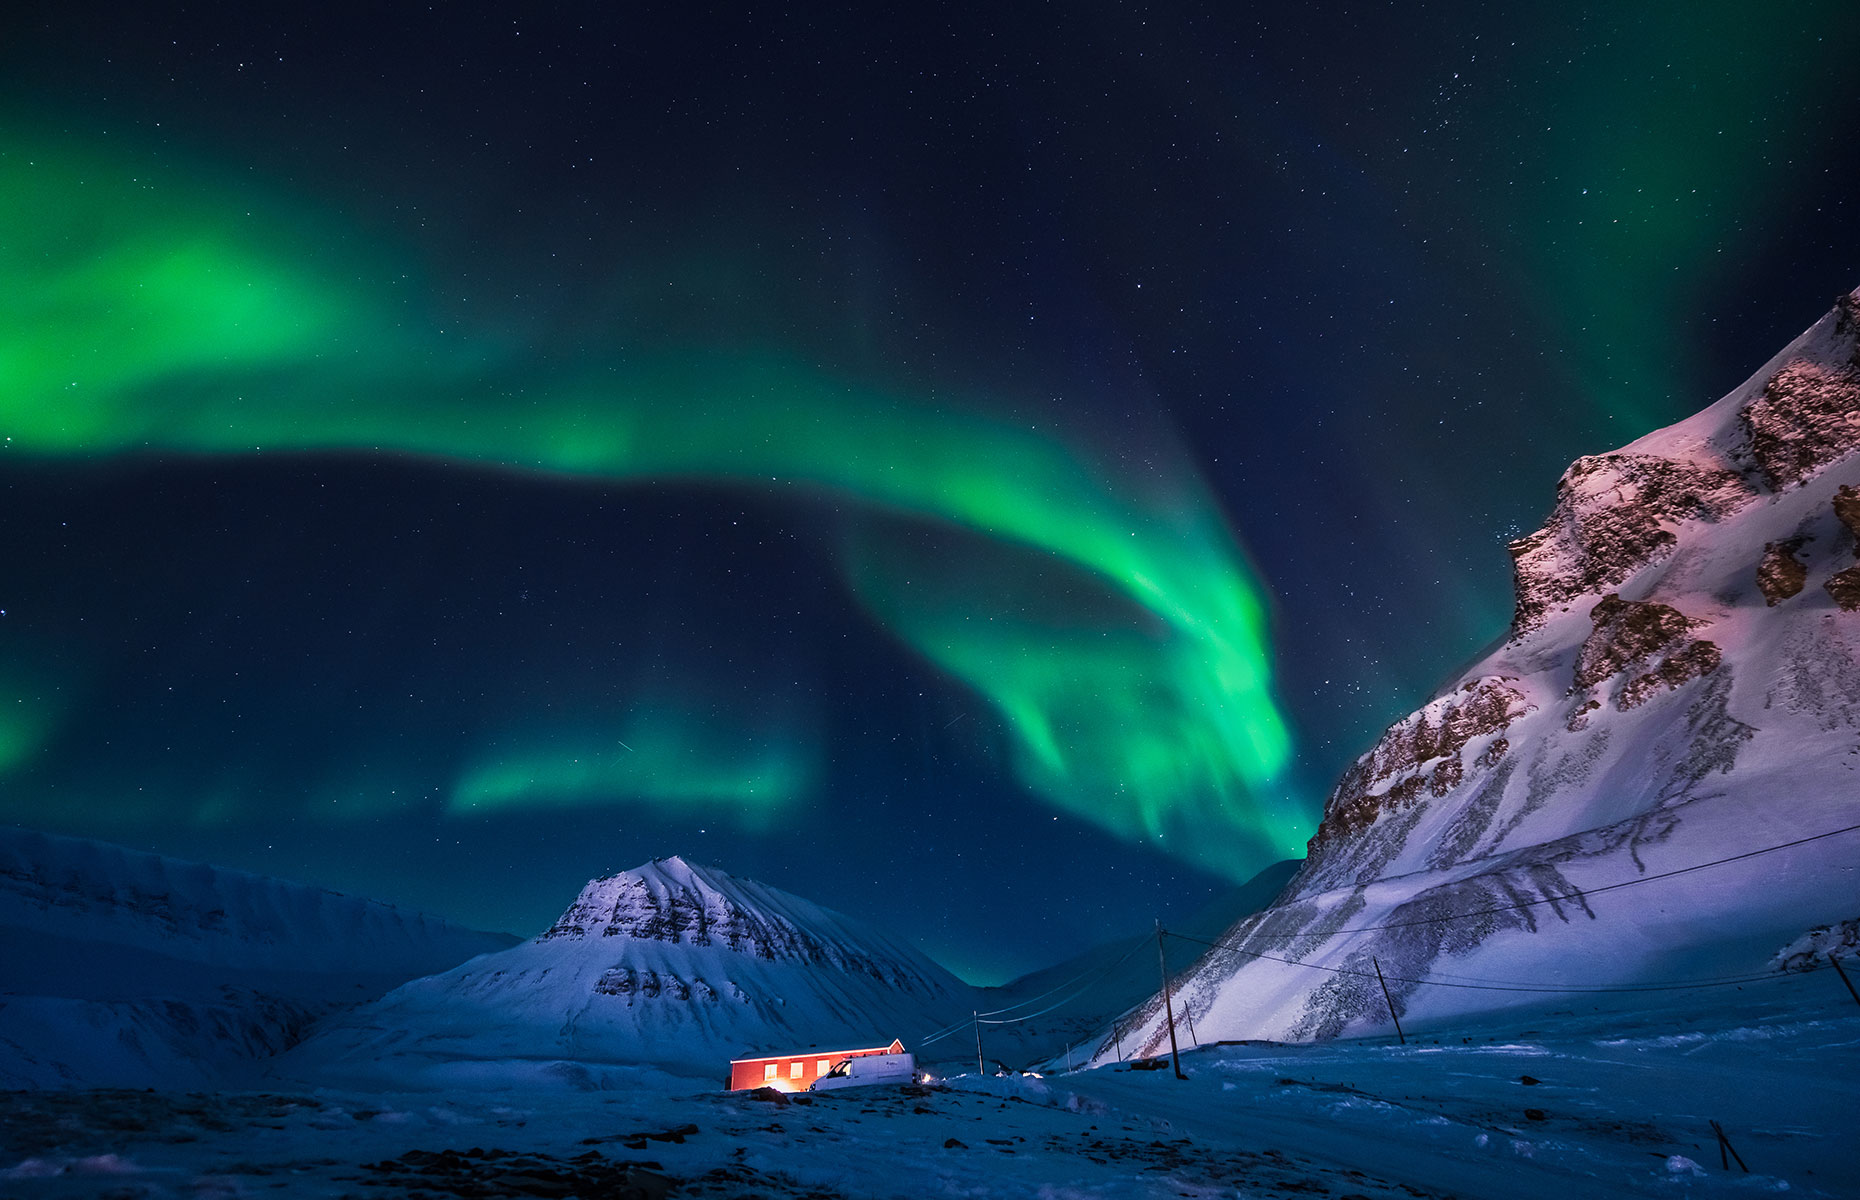 Northern Lights viewed over Longyearbyen (Image: ginger_polina_bublik/Shutterstock)